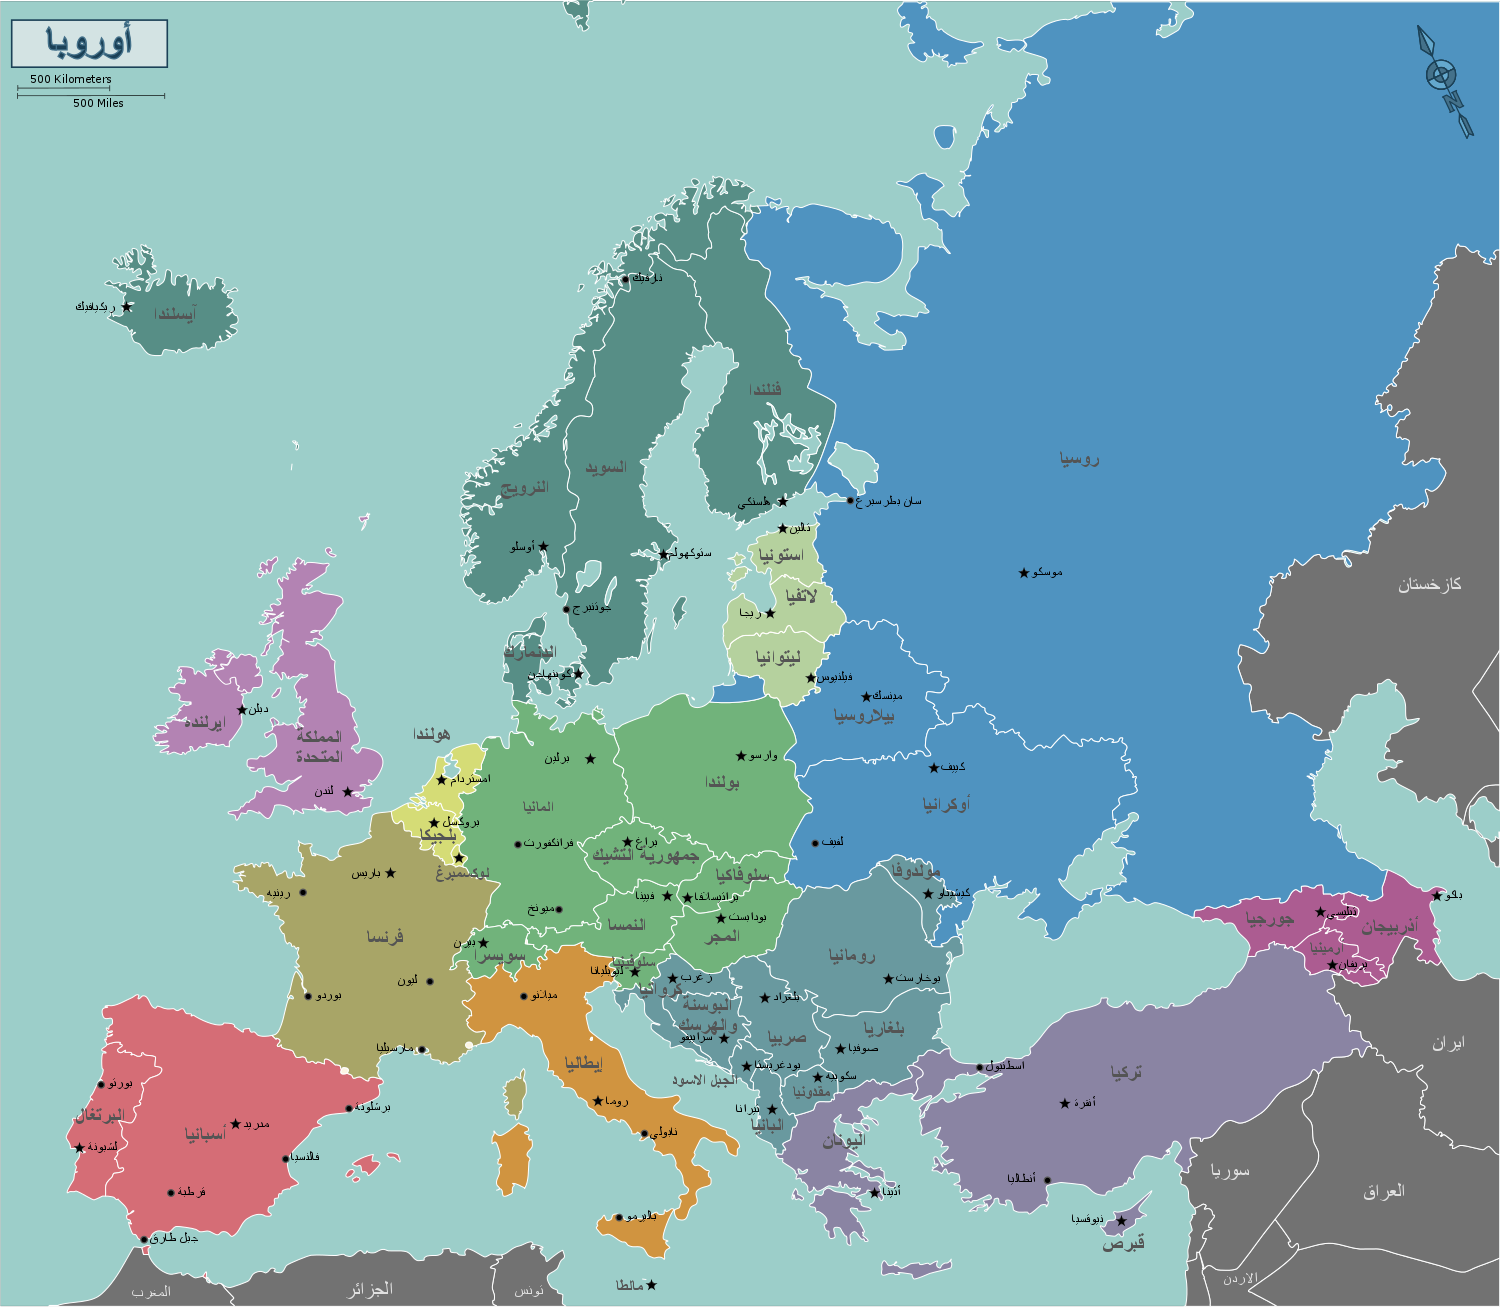 File:خريطة اوروبا السياسية.png - Wikimedia Commons